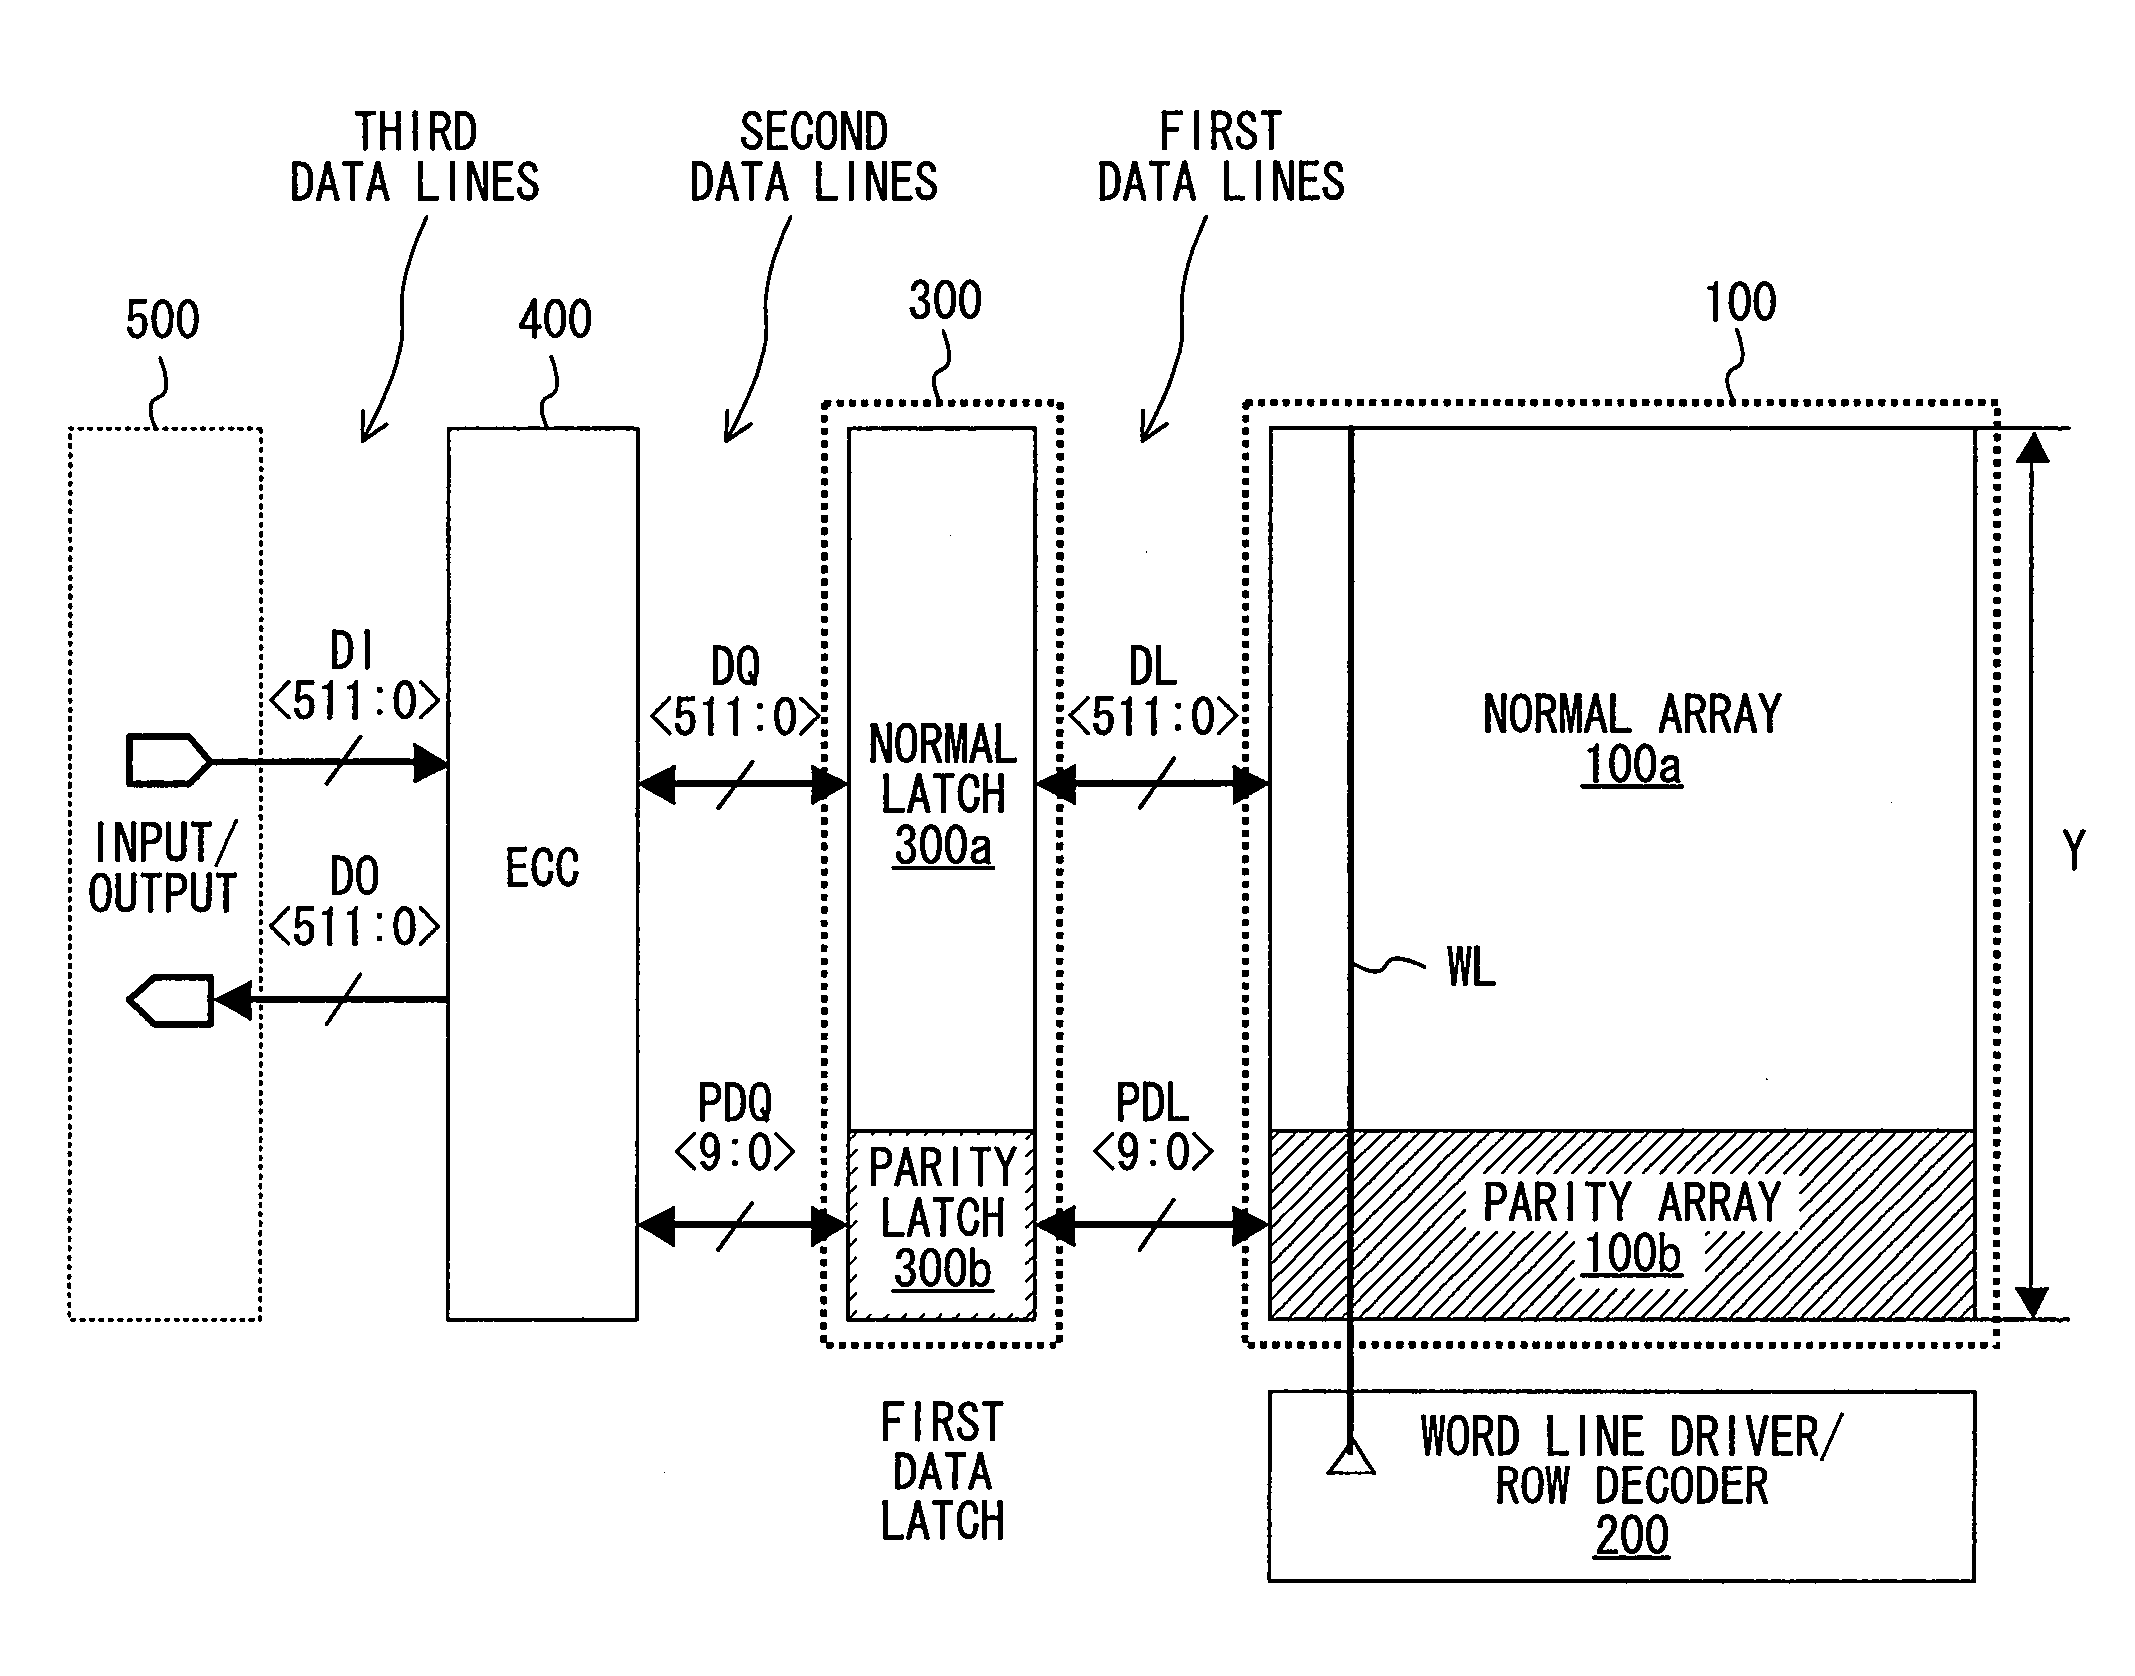 Semiconductor storage device